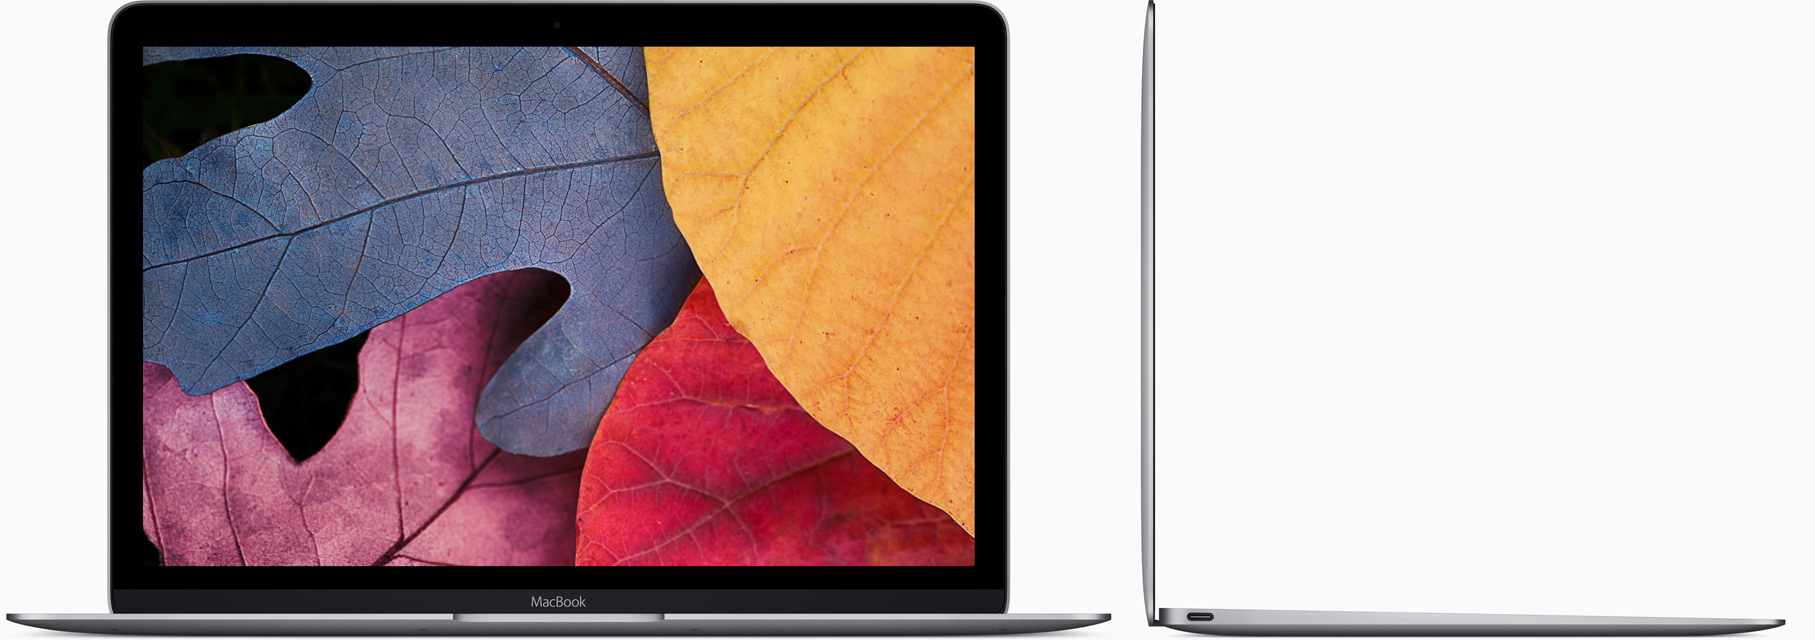 Immagine pubblicata in relazione al seguente contenuto: Apple sviluppa CPU ARM per i MacBook e MacBook Pro di nuova generazione | Nome immagine: news25749_Apple-MacBook-CPU-ARM_1.jpg